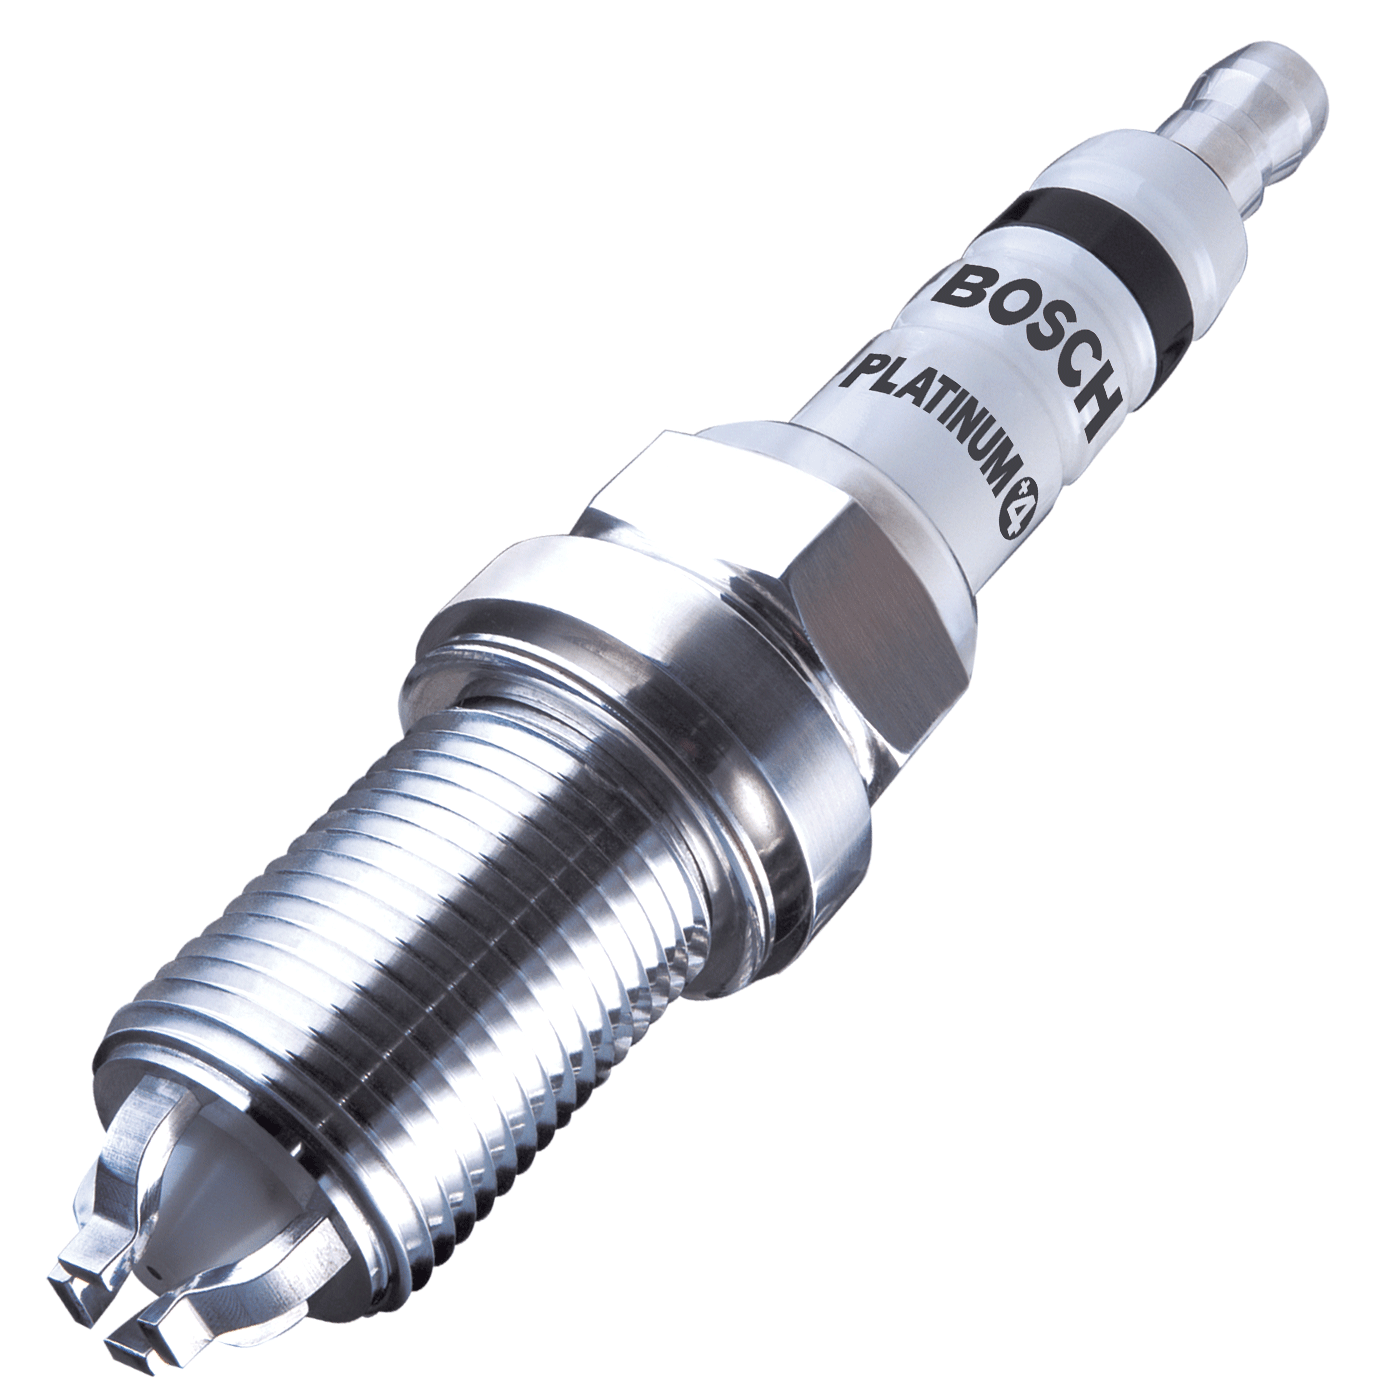 Bosch spark plug f7dcr